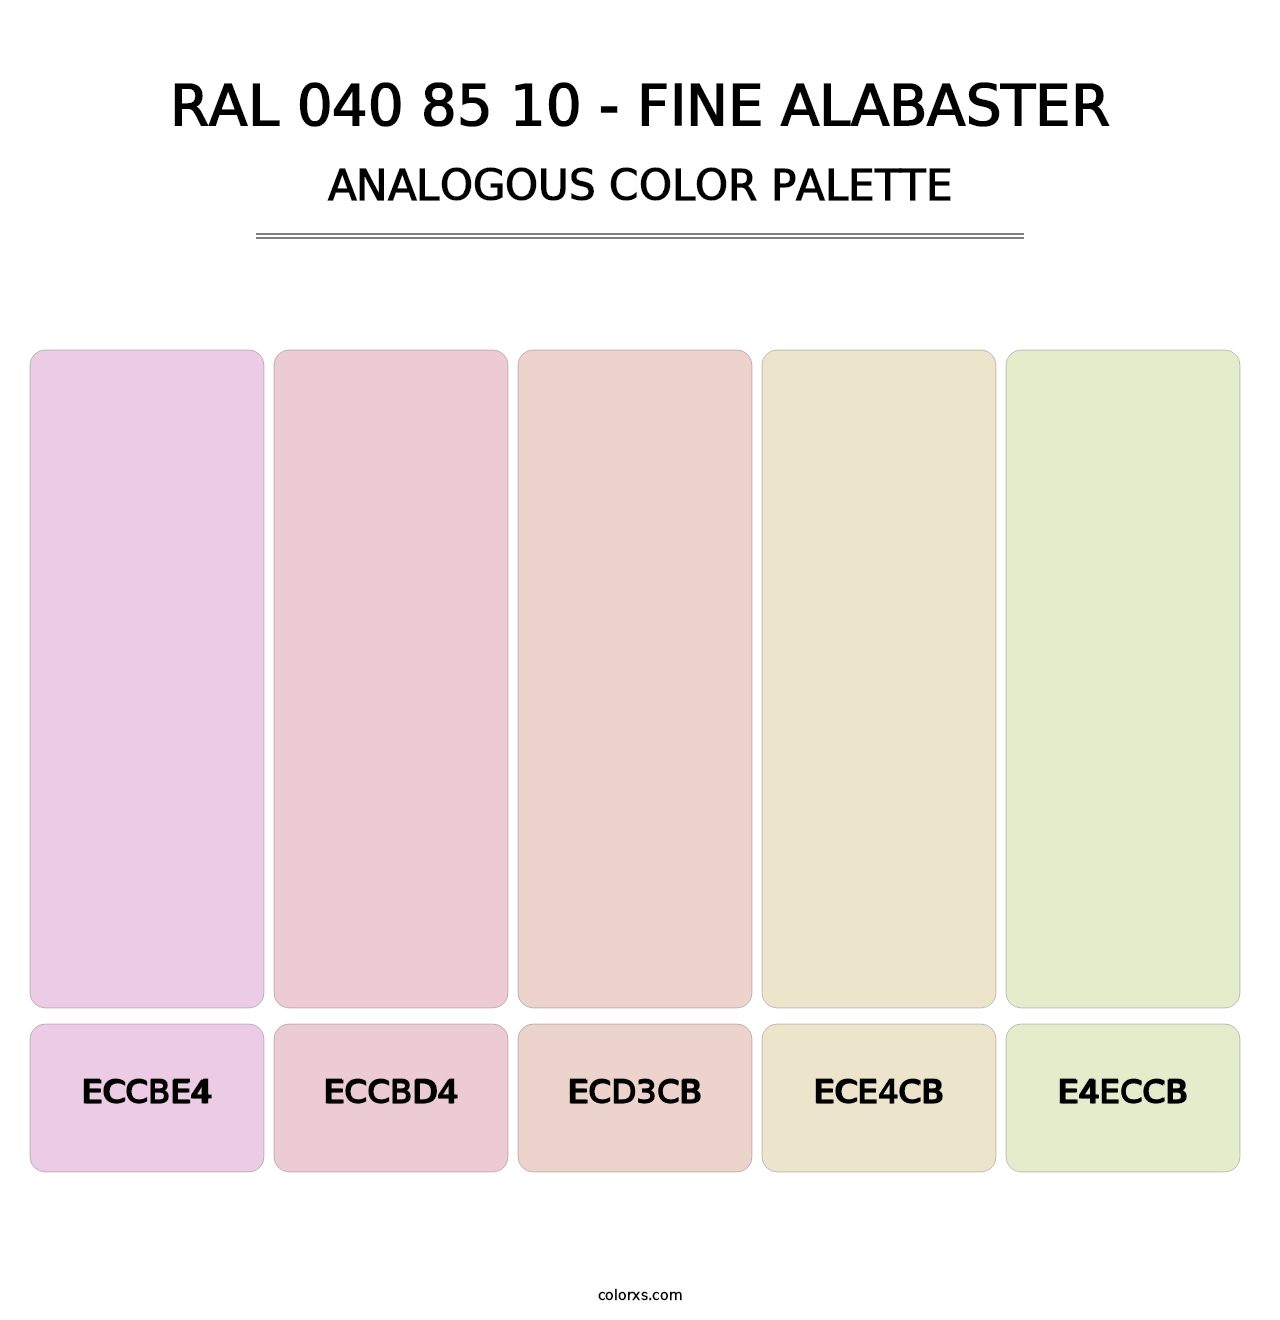 RAL 040 85 10 - Fine Alabaster - Analogous Color Palette